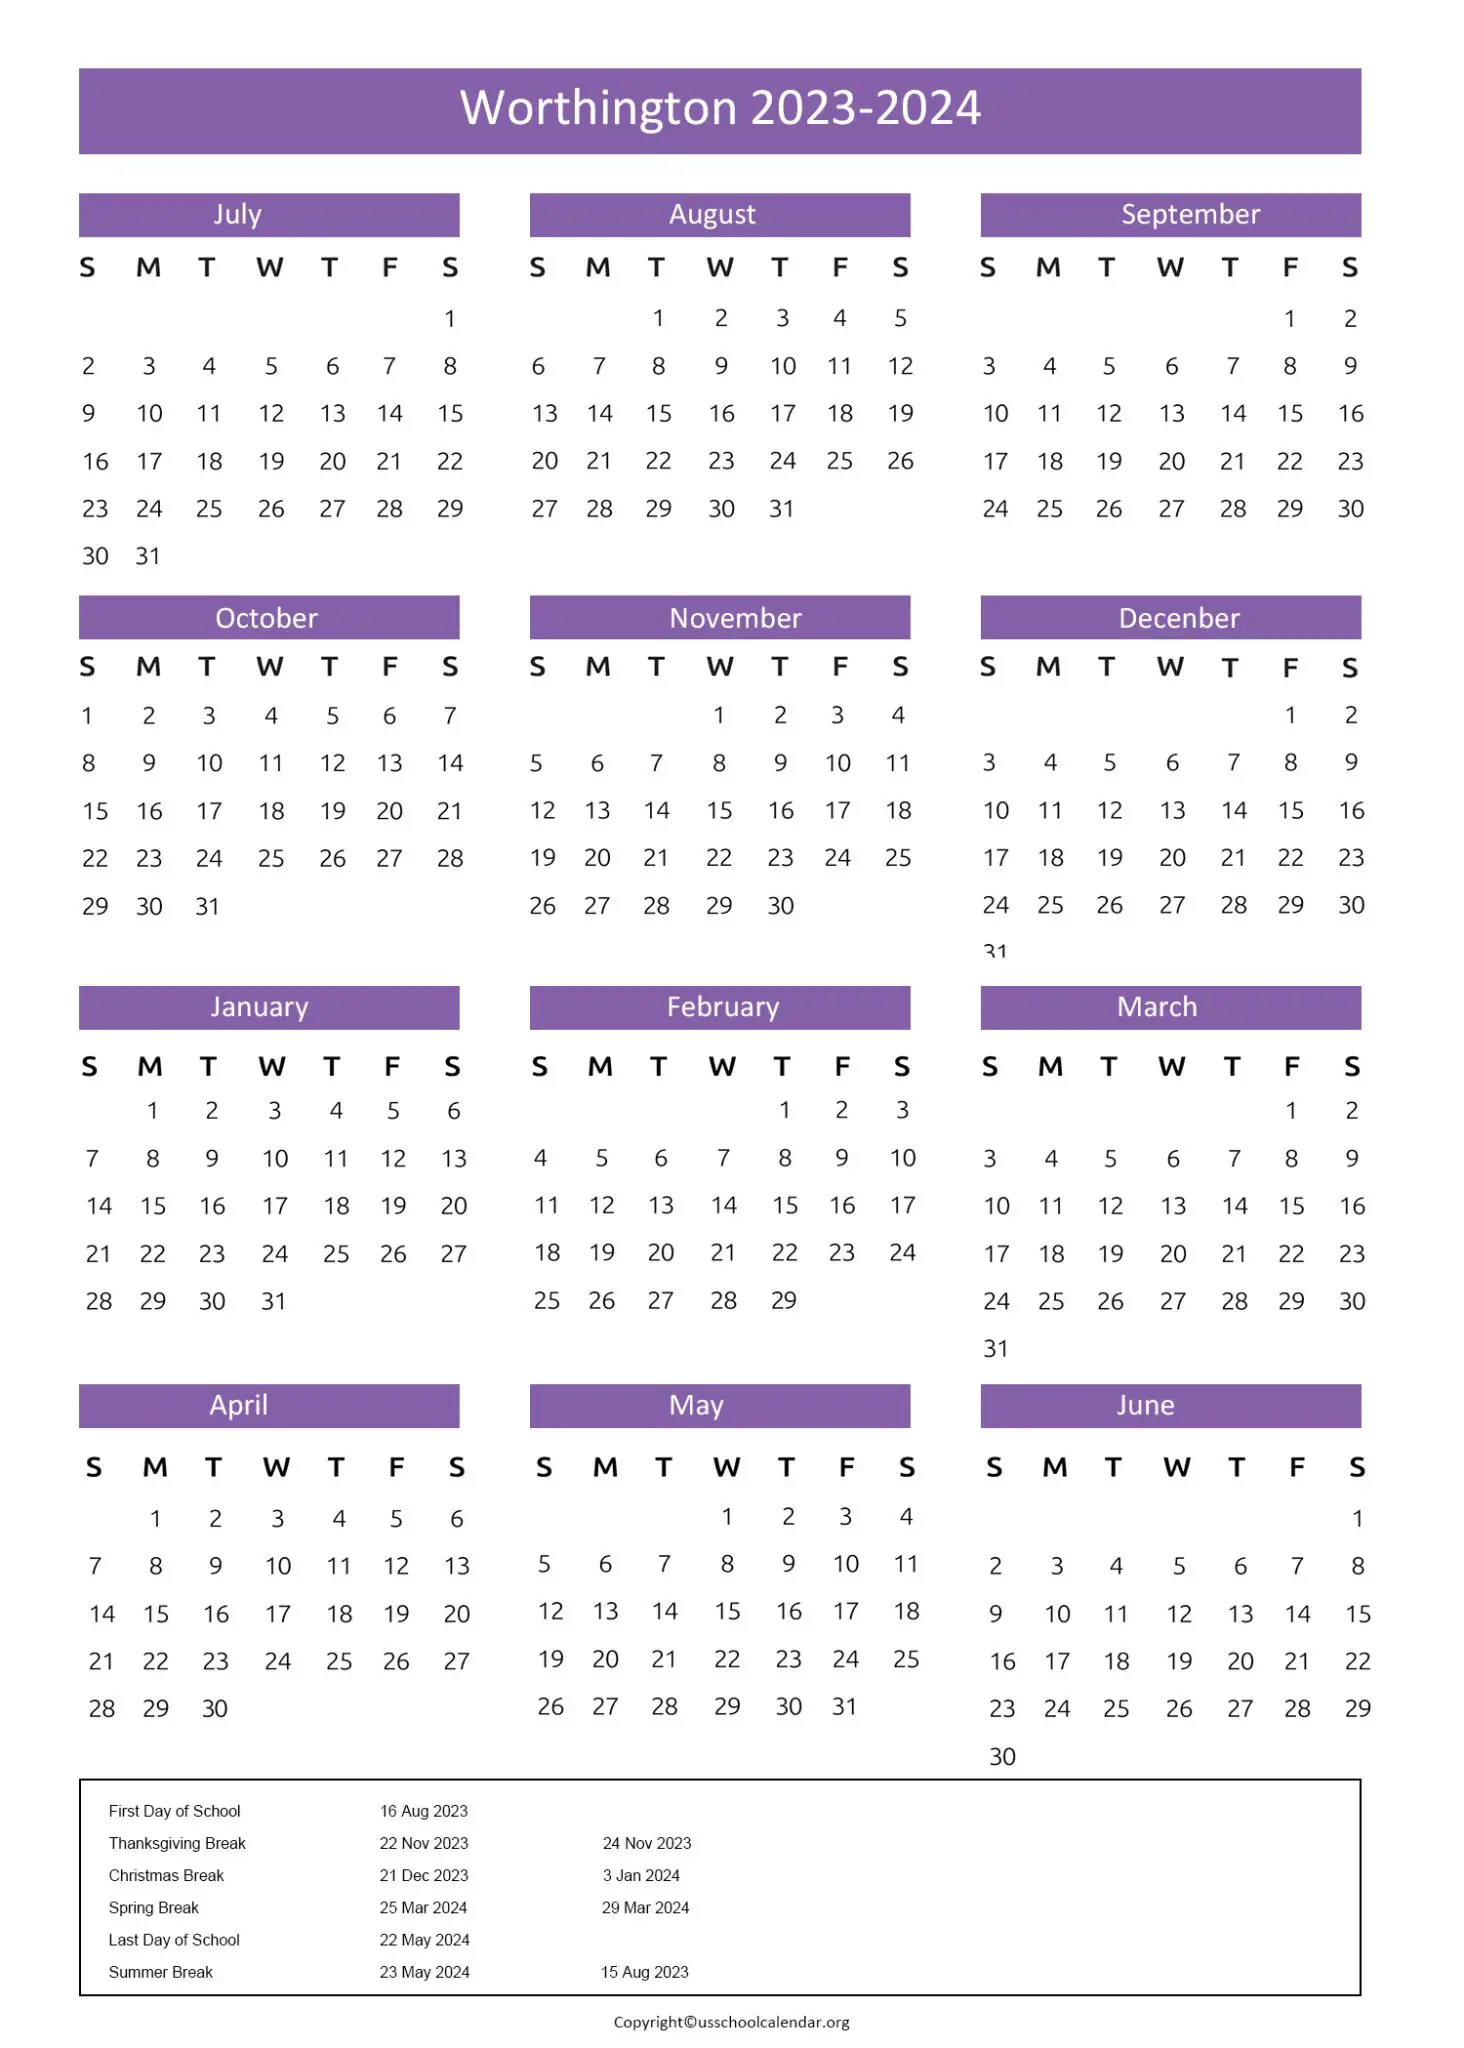 worthington-schools-calendar-with-holidays-2023-2024